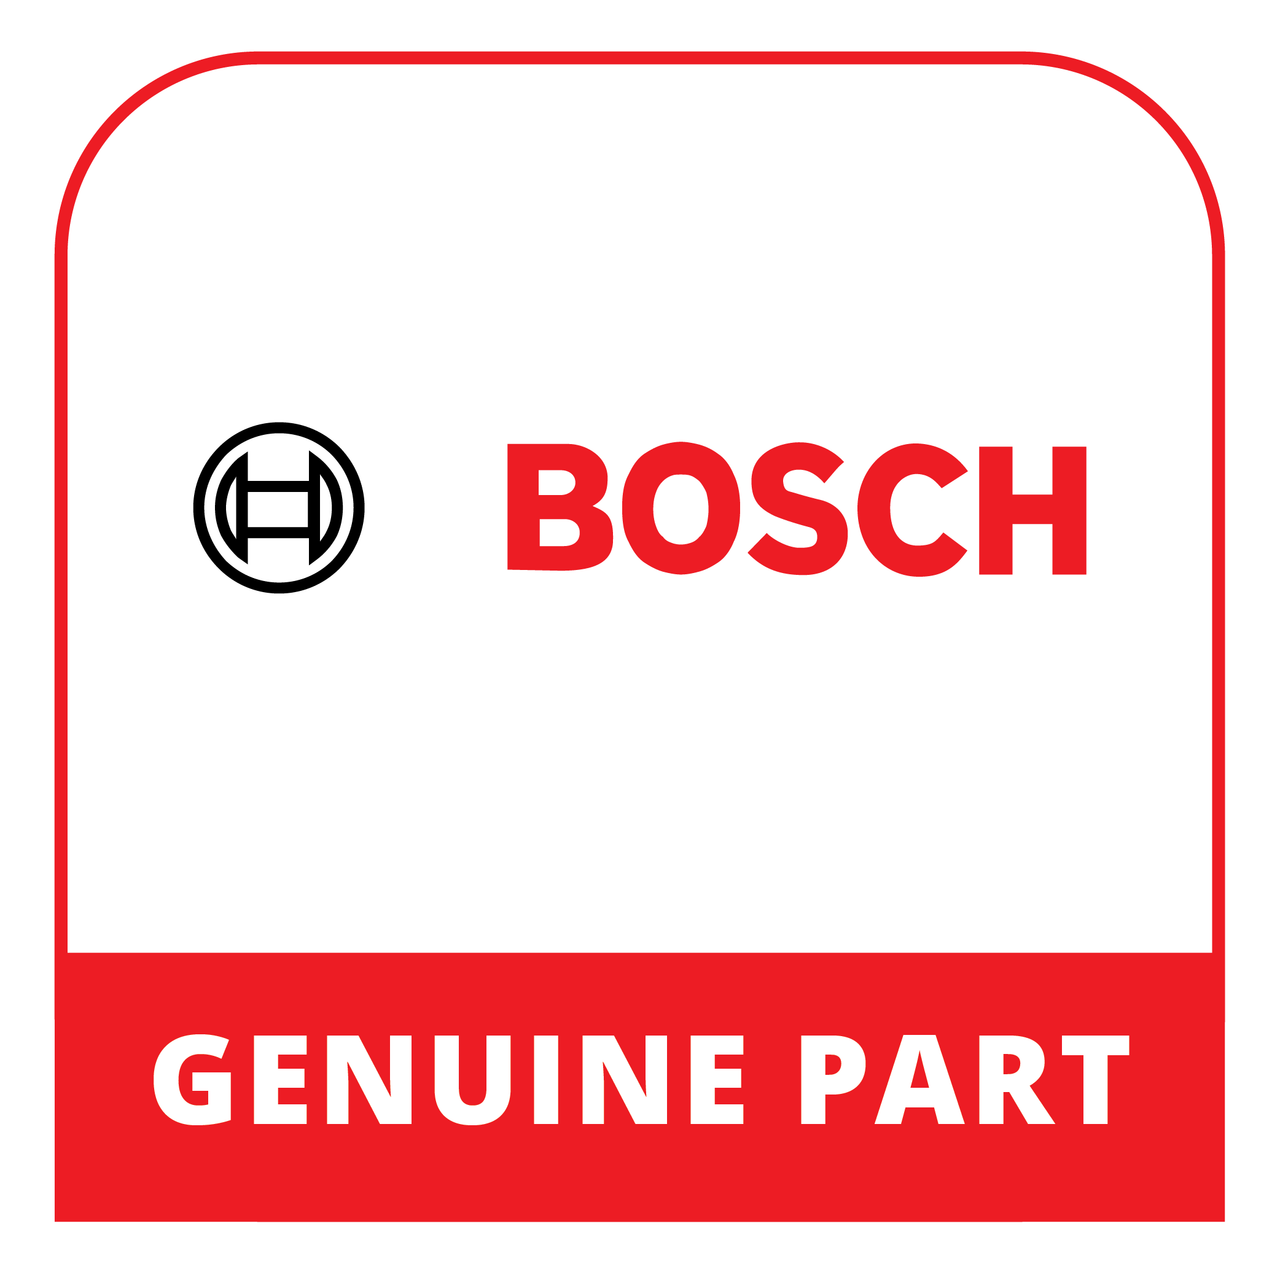 Bosch (Thermador) 23001209 - Hob Top - Genuine Bosch (Thermador) Part